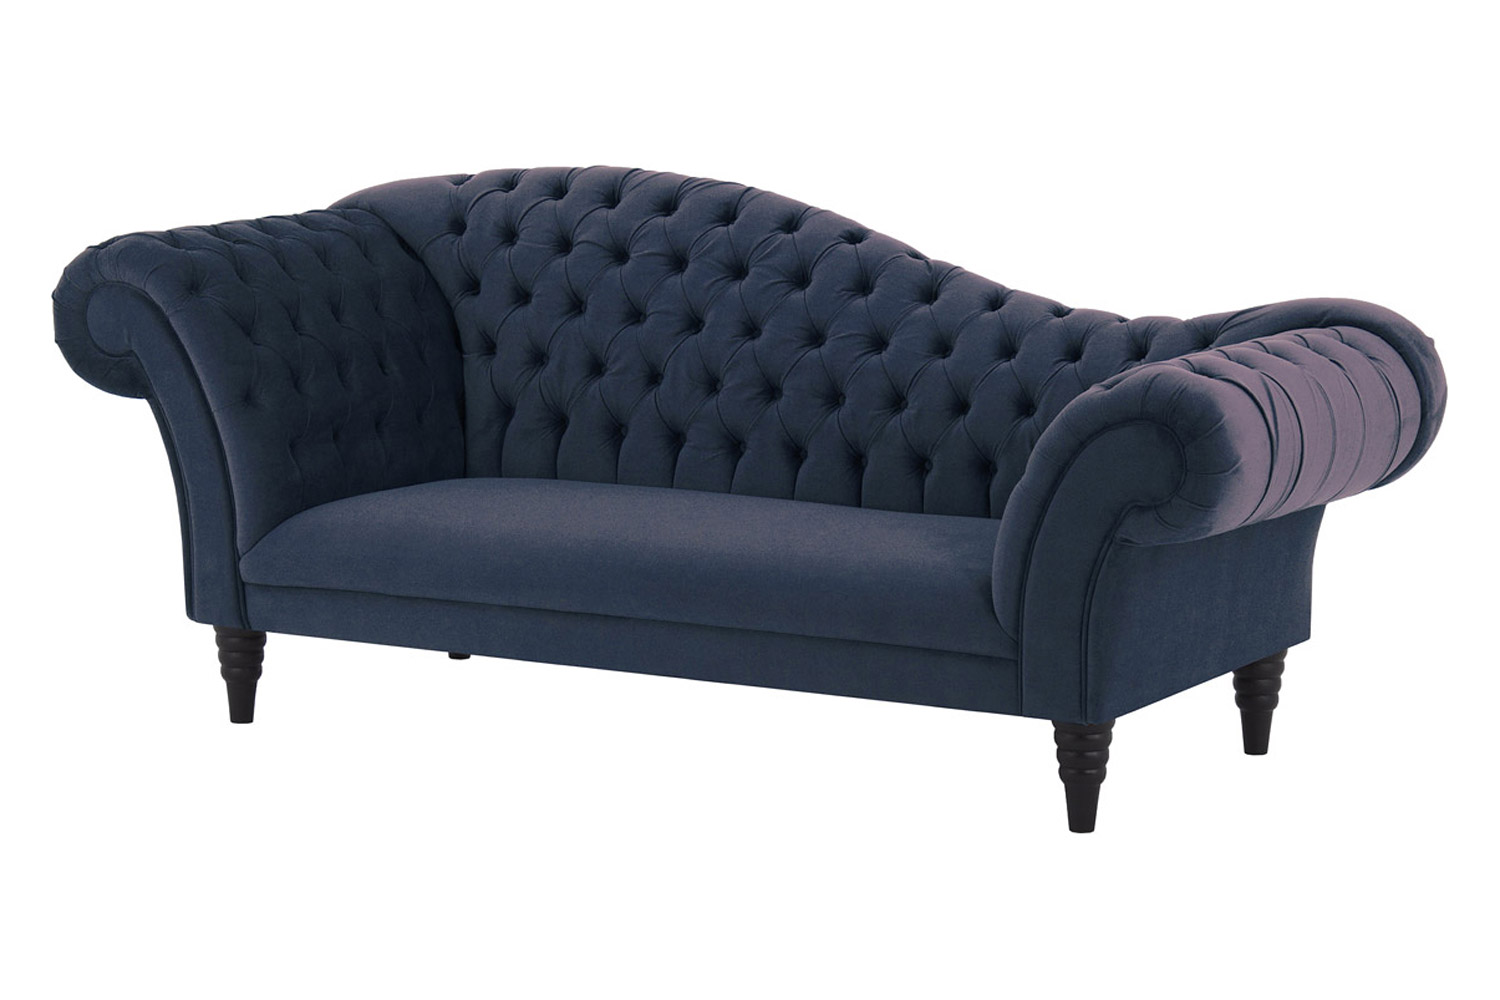 Stylish and modern sofa Maxima Chester Sofa Navy Blue